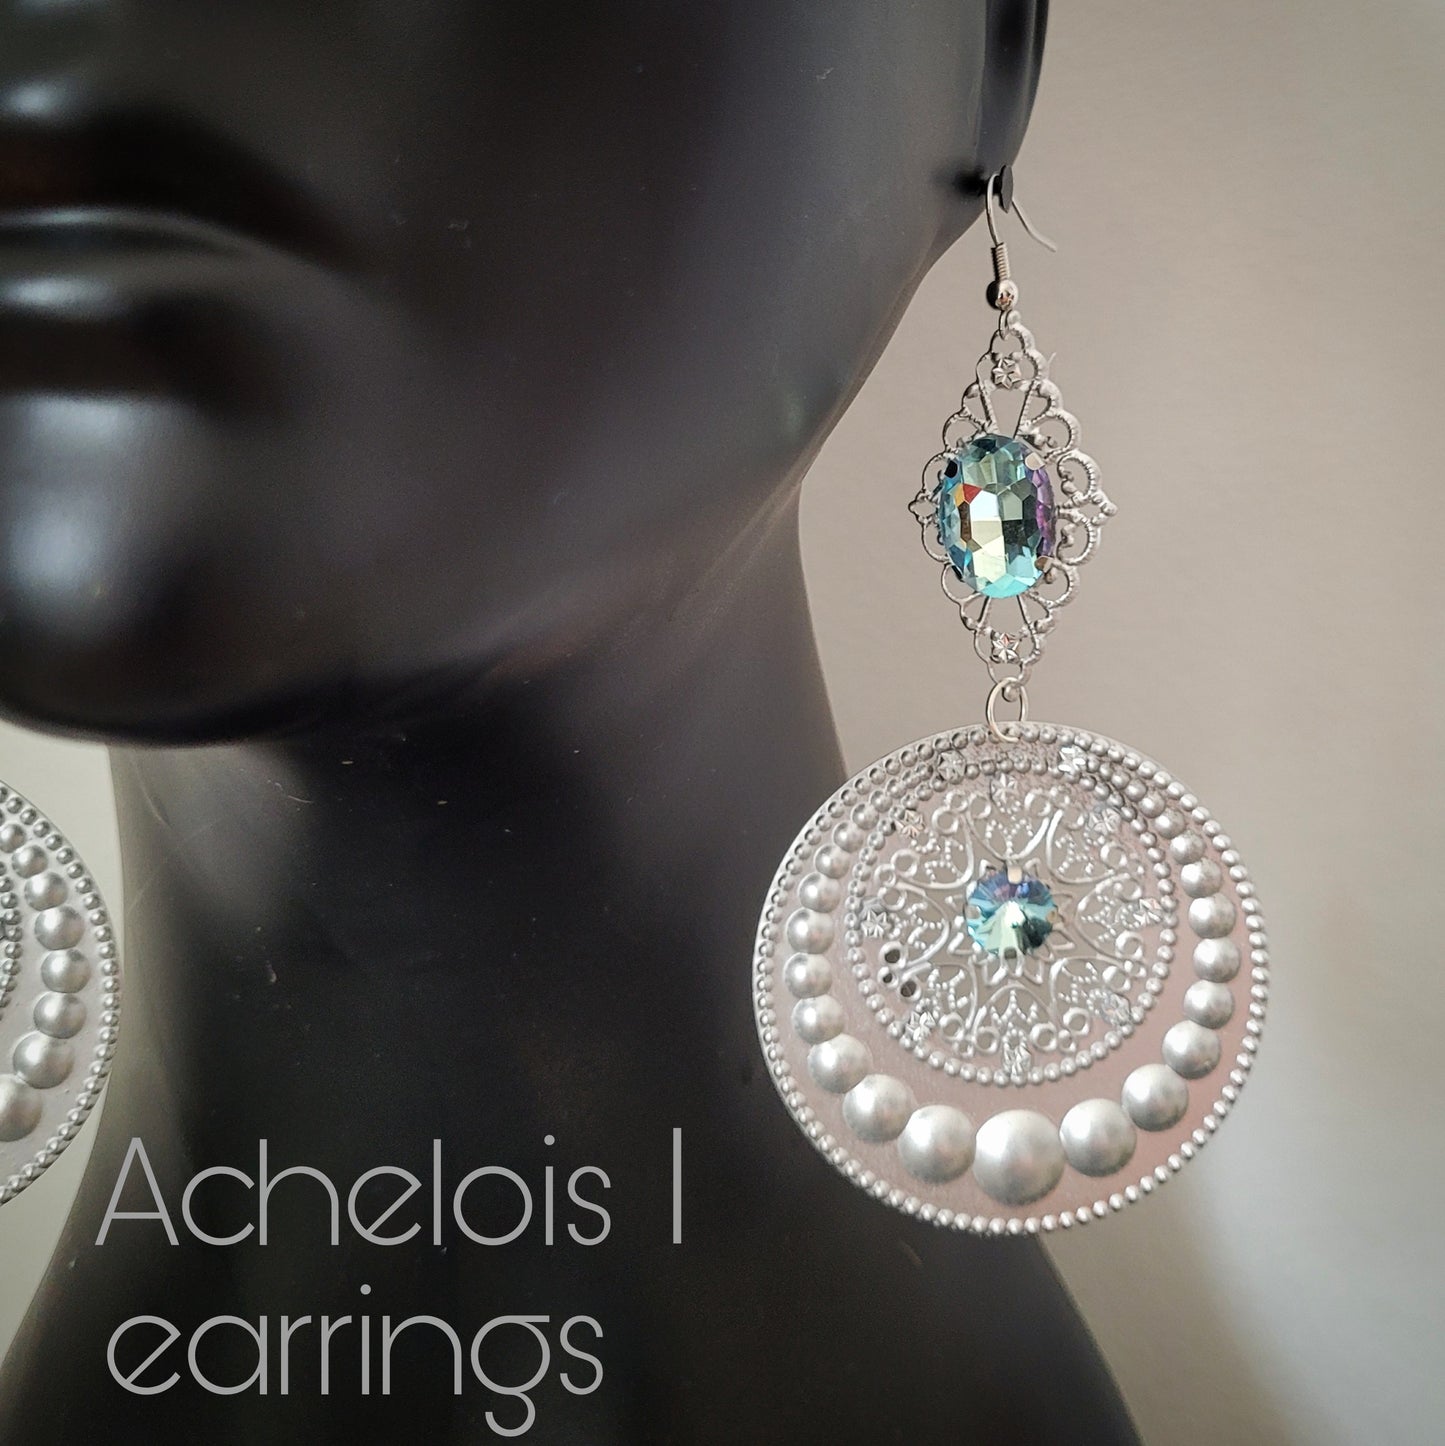 Deusa ex Machina collection: The Achelois earrings